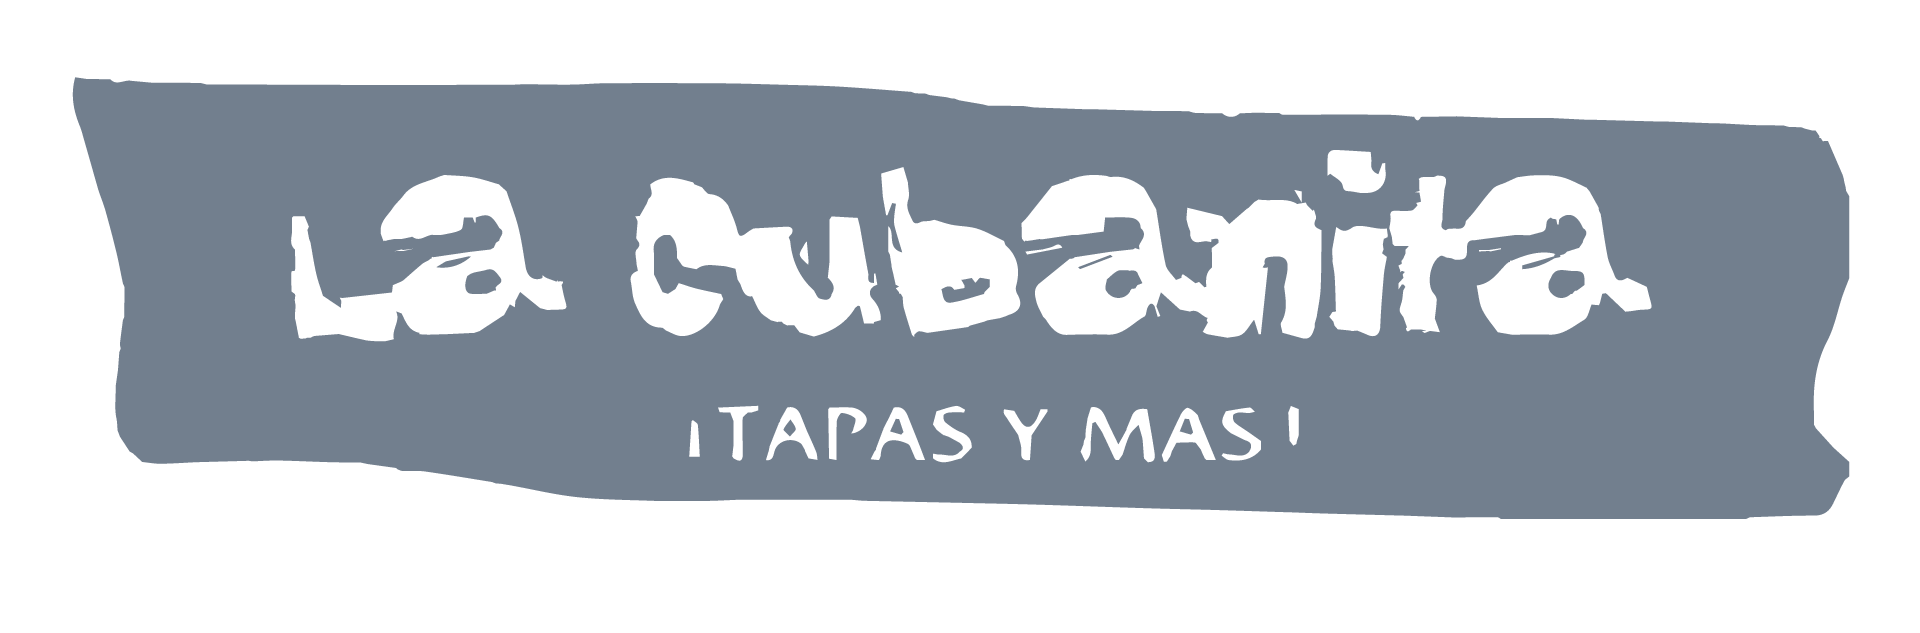 Resengo - Logo La Cubanita